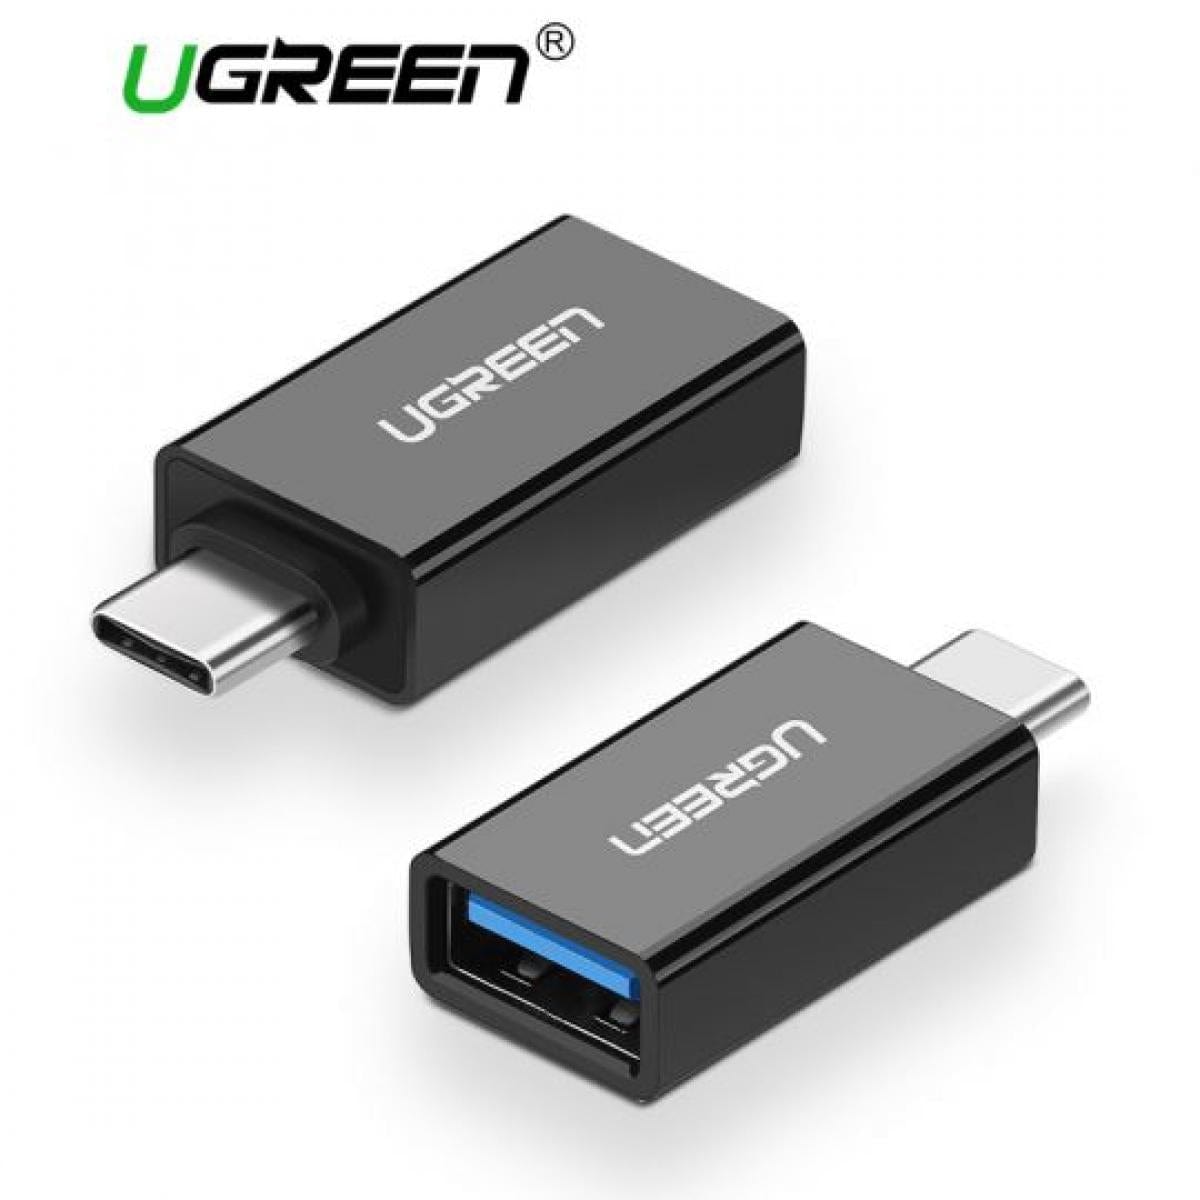 UGREEN Convertor UGREEN Converter Type-C Male to USB 3.0 Female OTG Adapter-Black